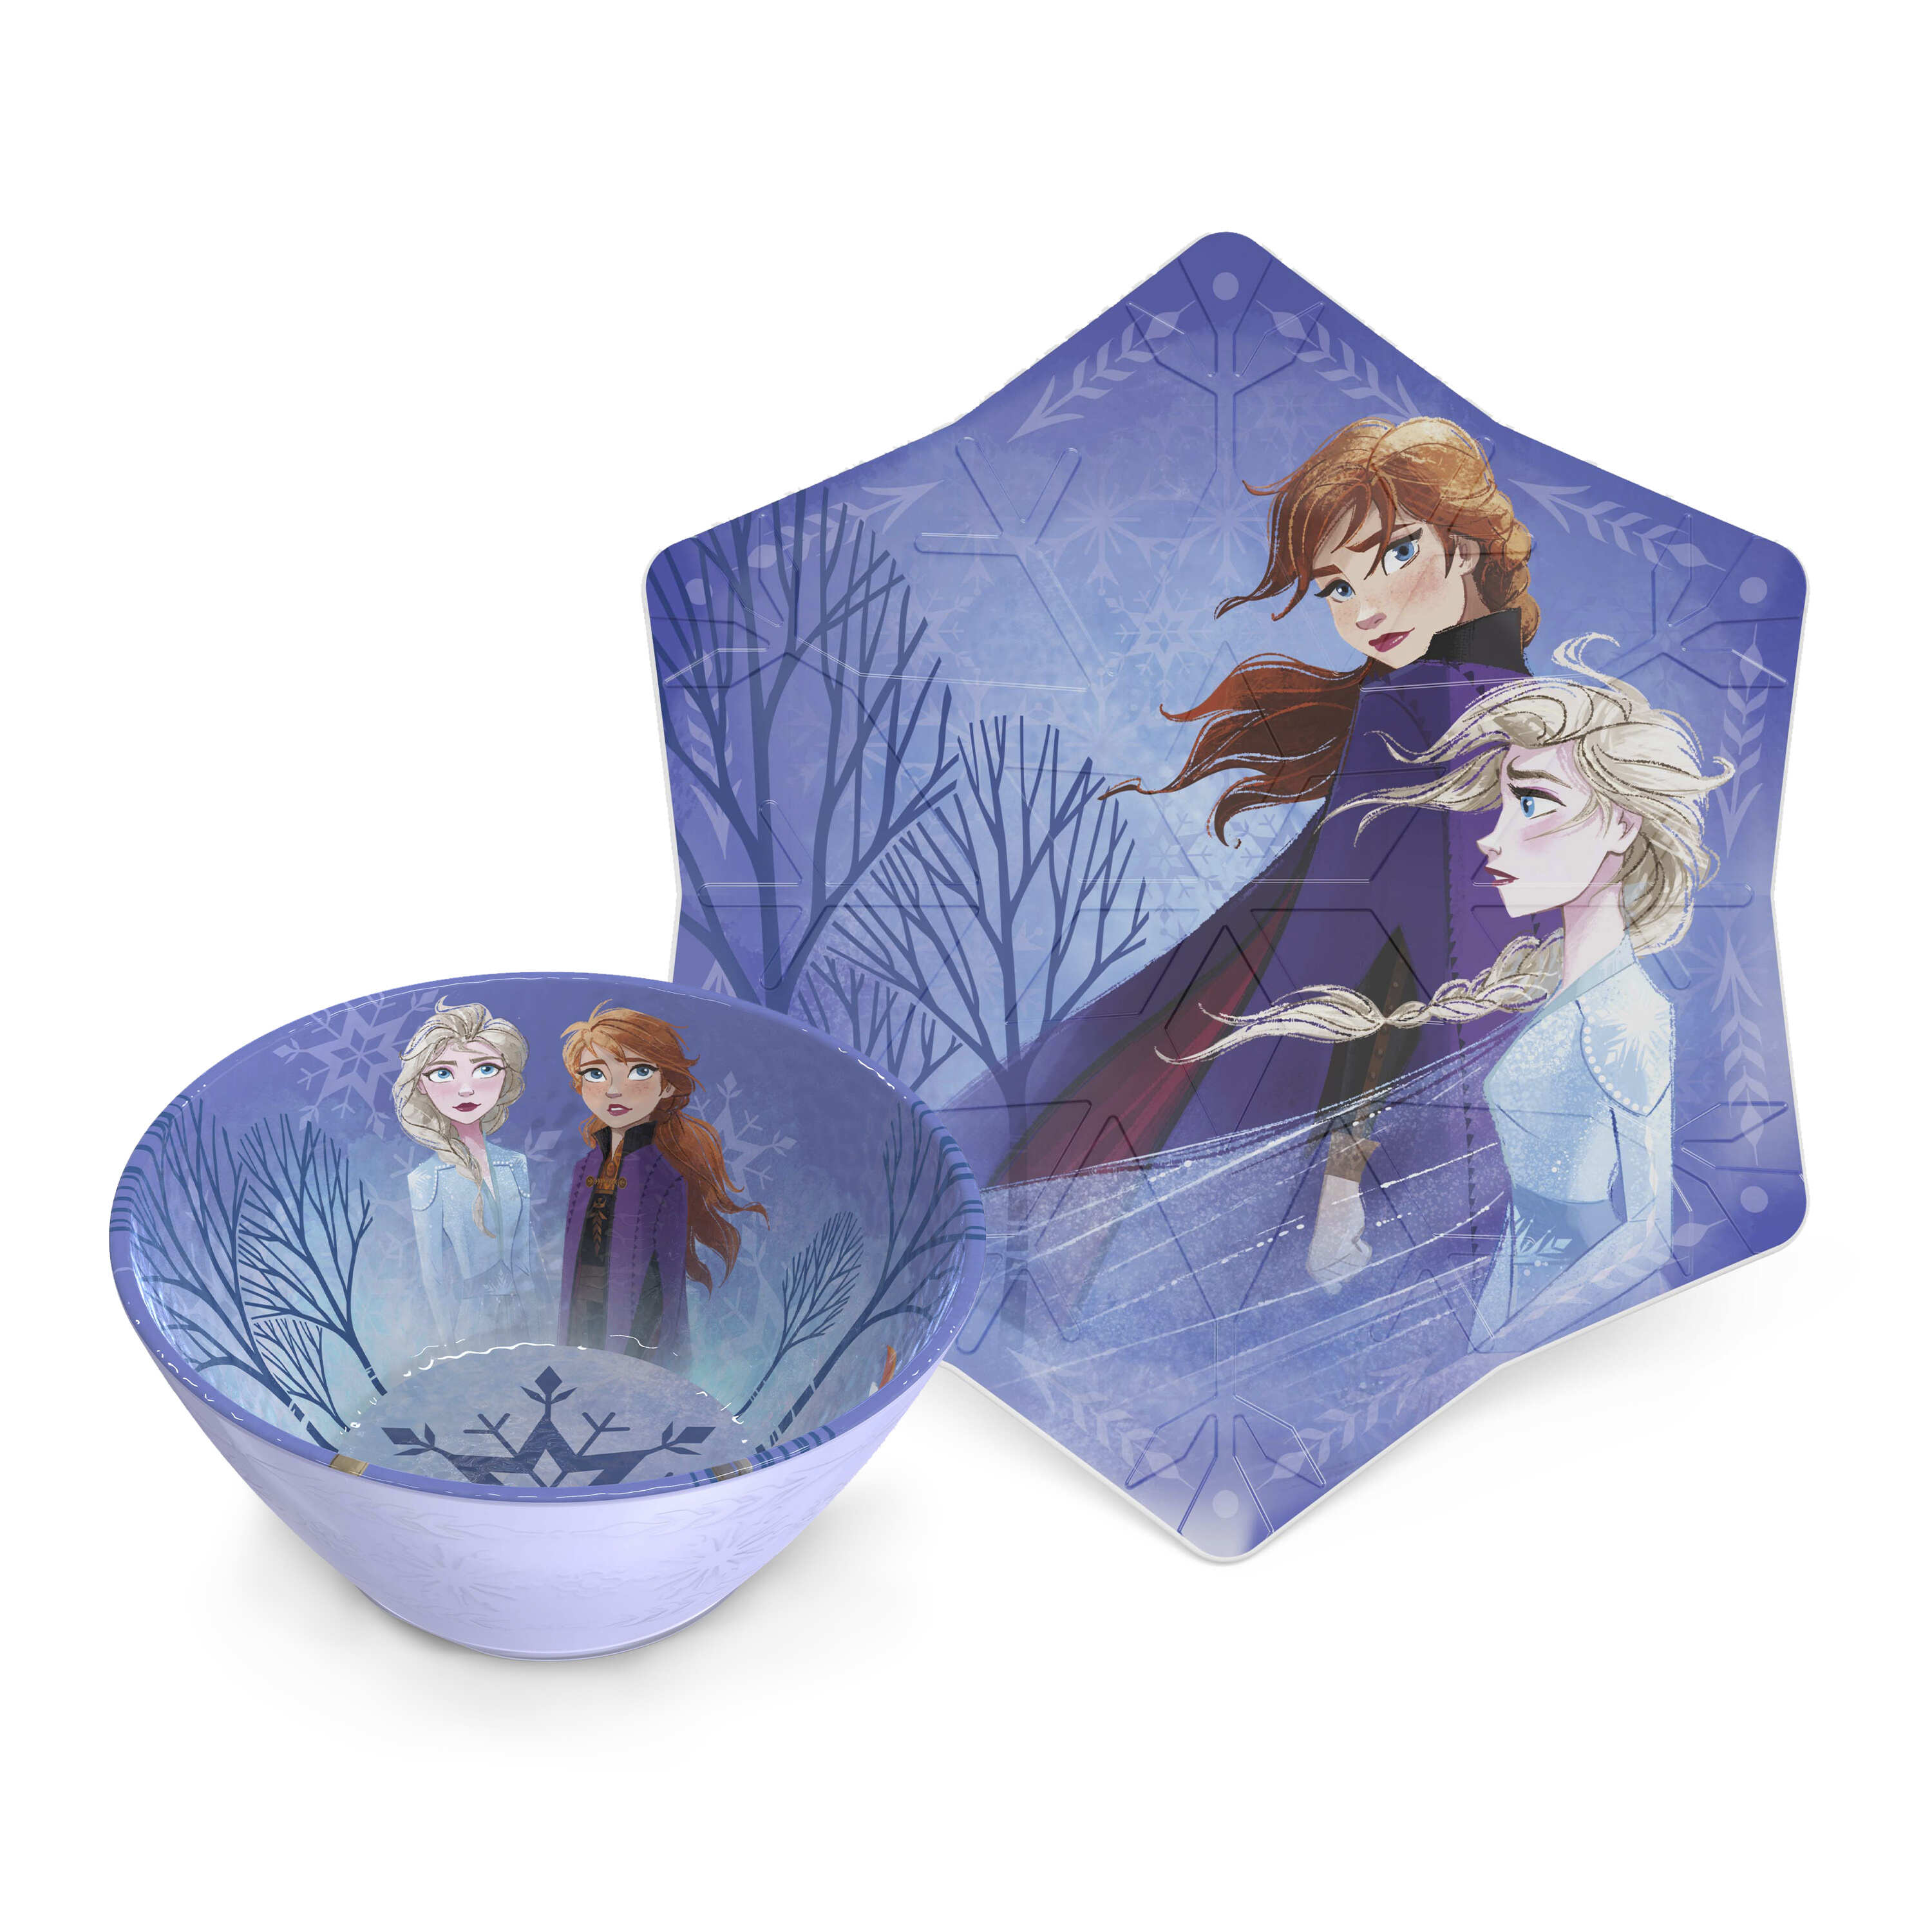 Zak Includes Elsa & Anna Bowl BPA Free Designs Kids 3pc Mealtime Set Featuring Disney Frozen Fork & Spoon Plus Bonus Frozen Character Stickers! 